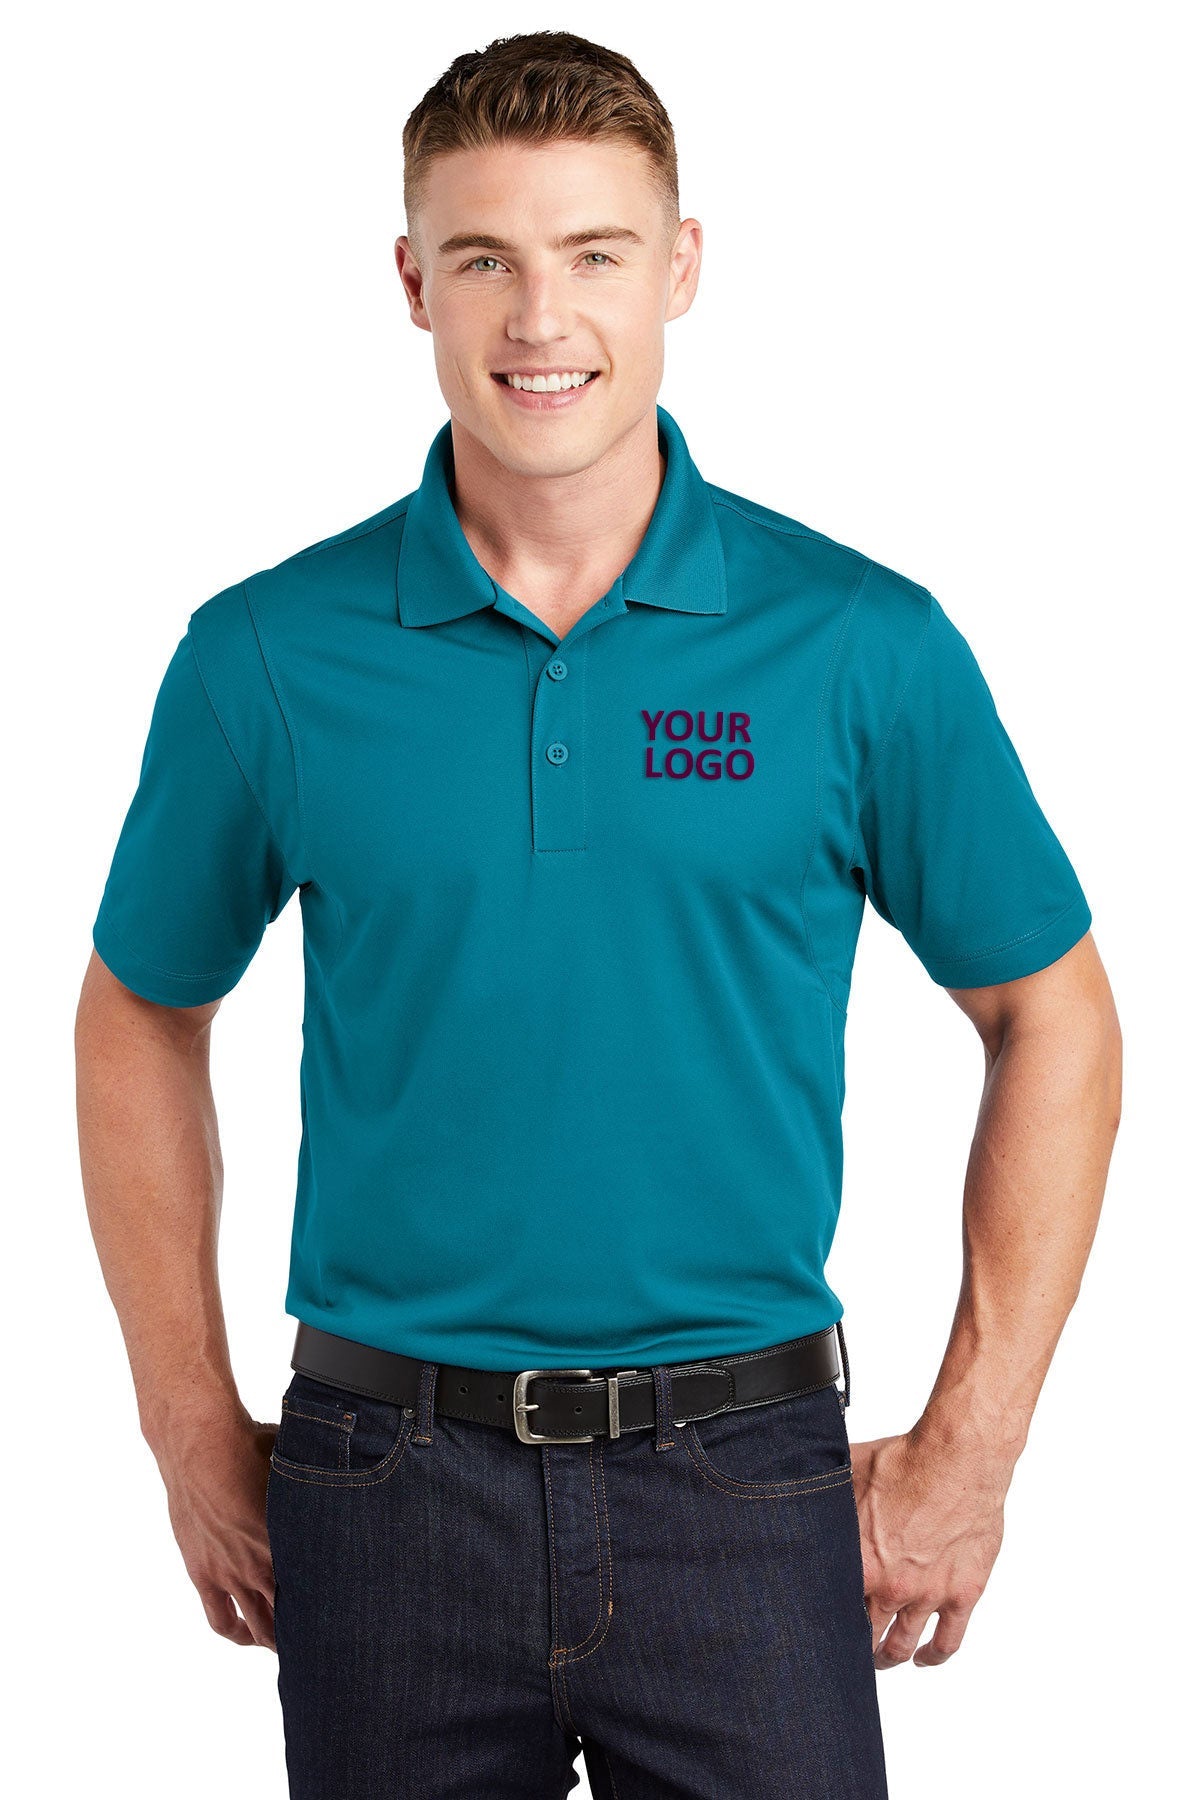 Sport-Tek Tropic Blue ST650 custom logo polo shirts embroidered